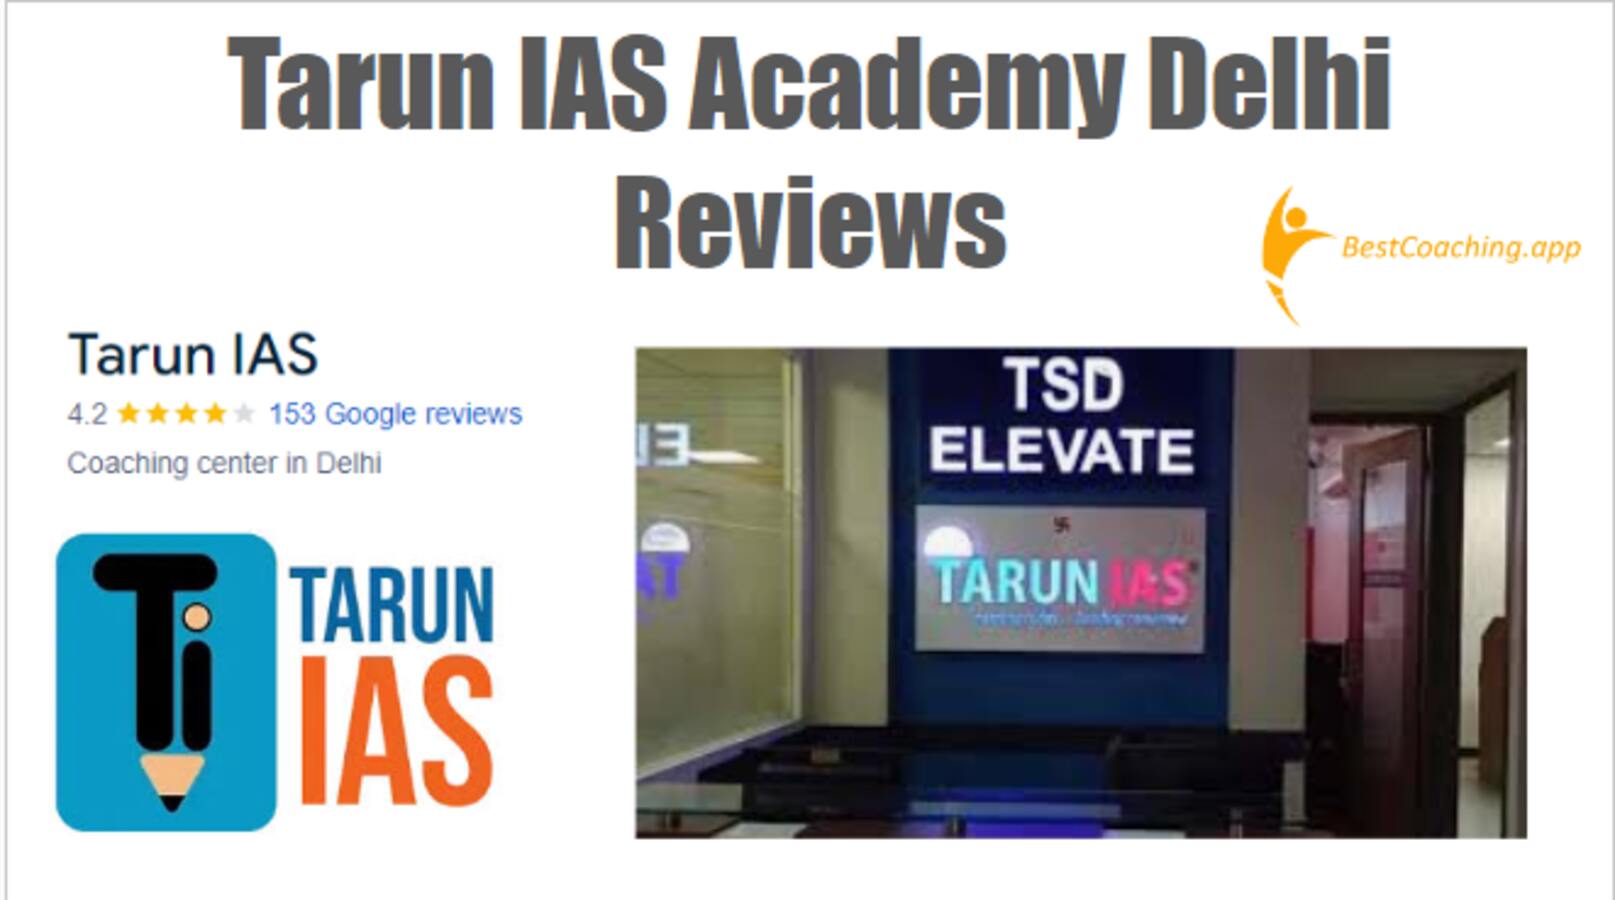 Tarun IAS Academy Delhi Reviews